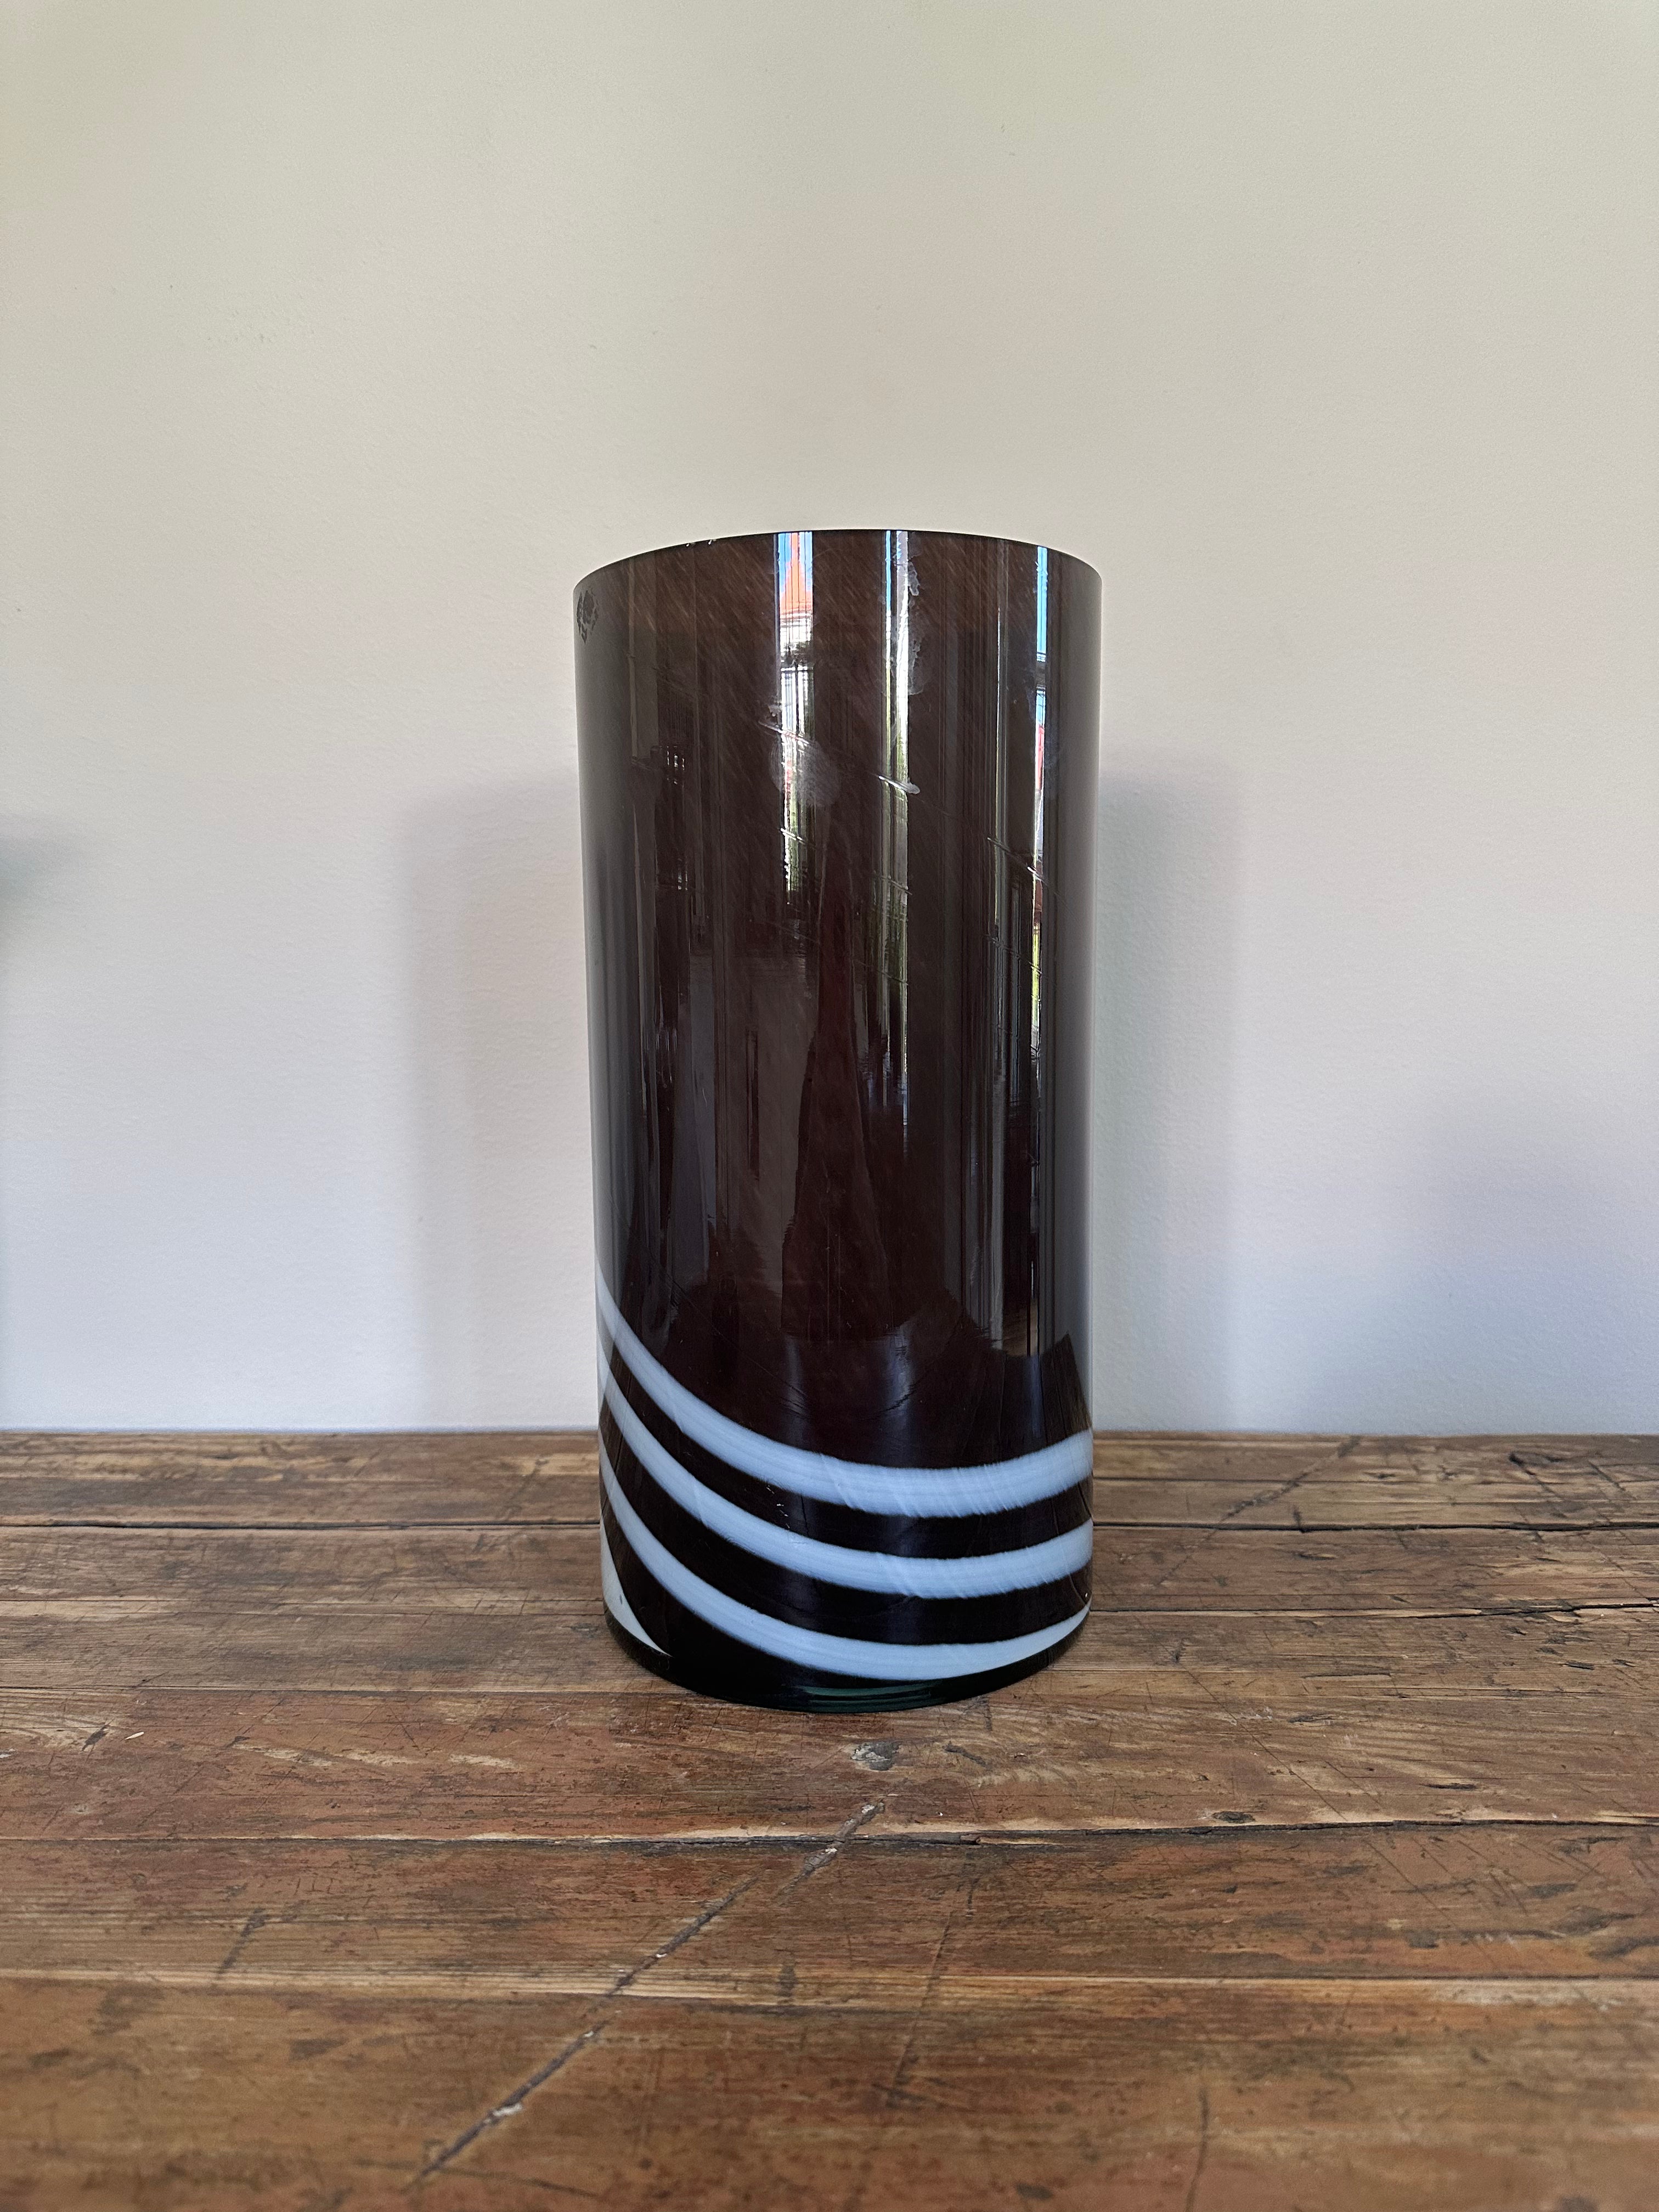 Purple glass vase